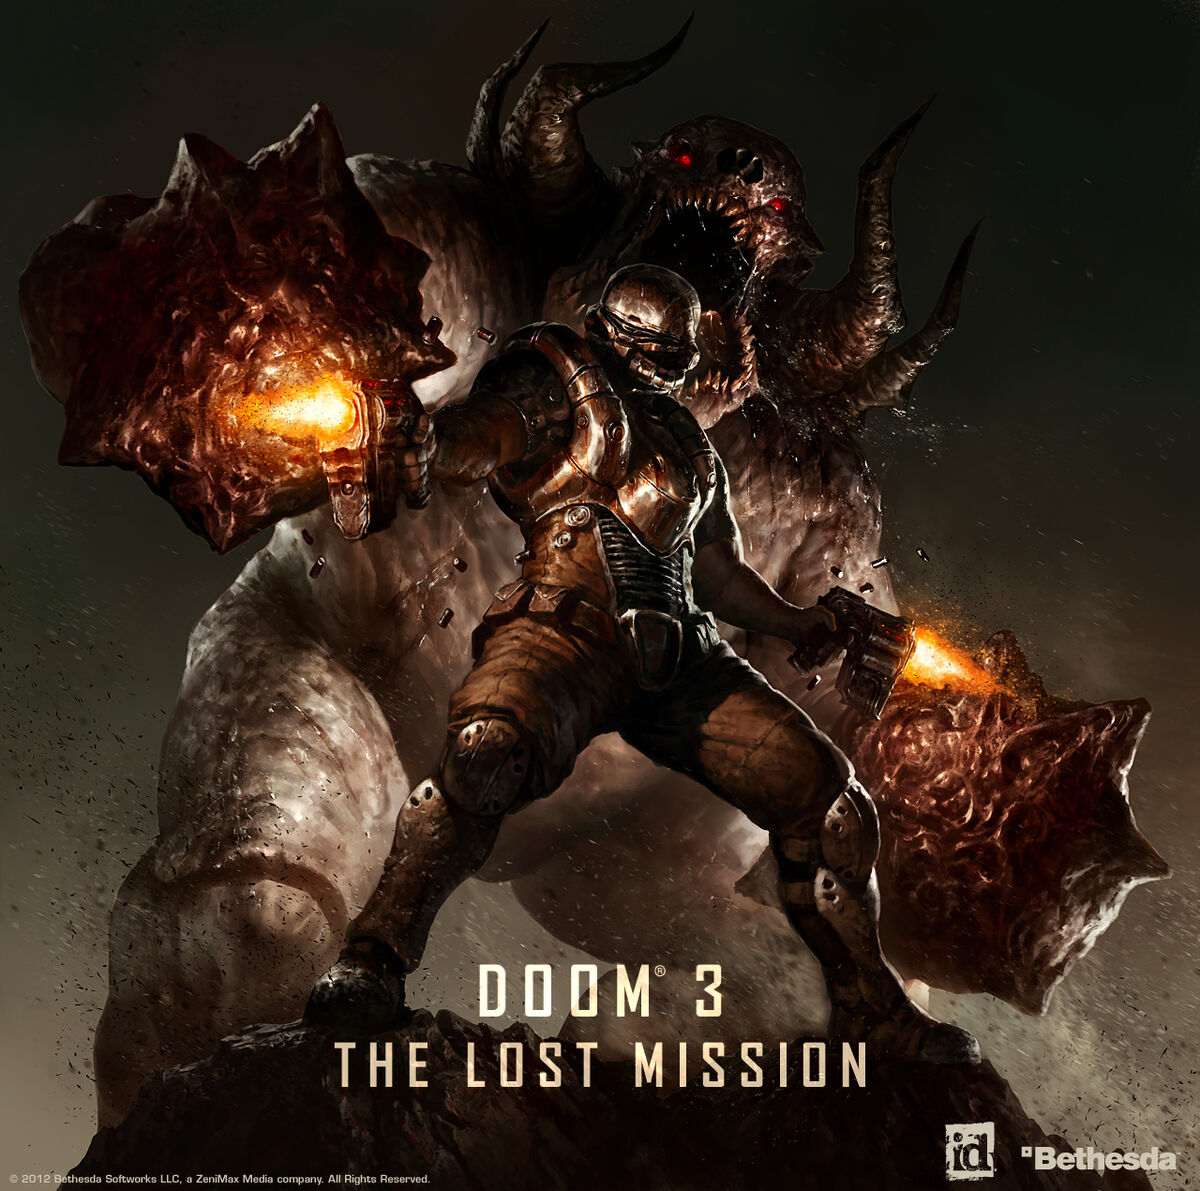 Horde Mode - The Doom Wiki at